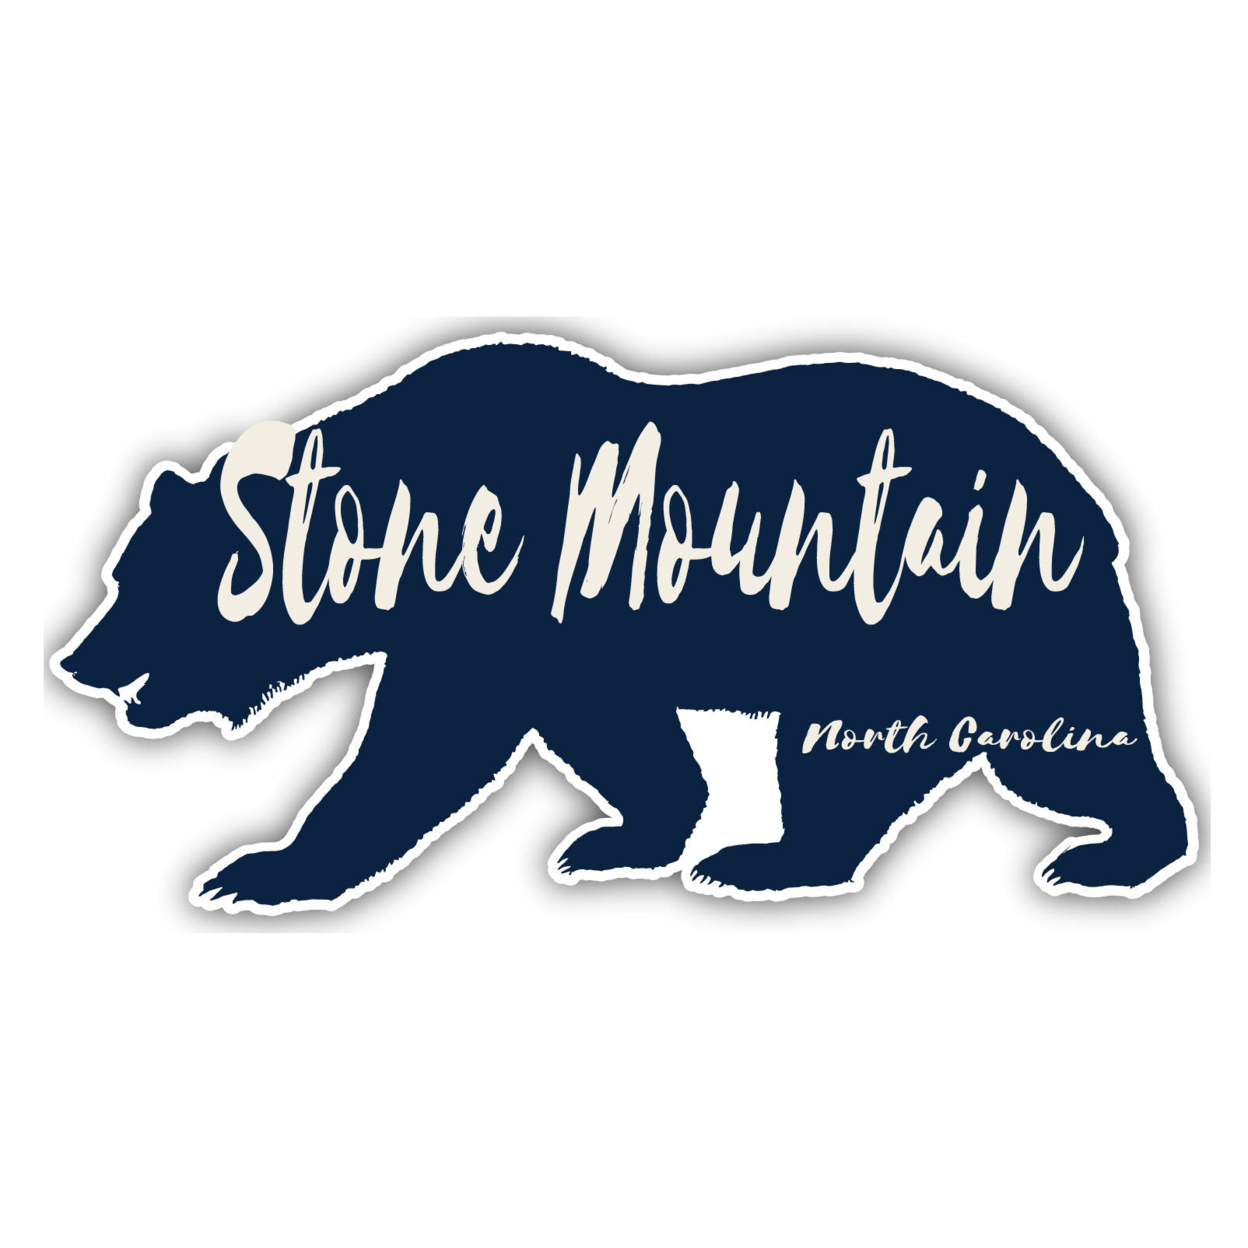 Stone Mountain North Carolina Souvenir Decorative Stickers (Choose Theme And Size) - Single Unit, 4-Inch, Bear